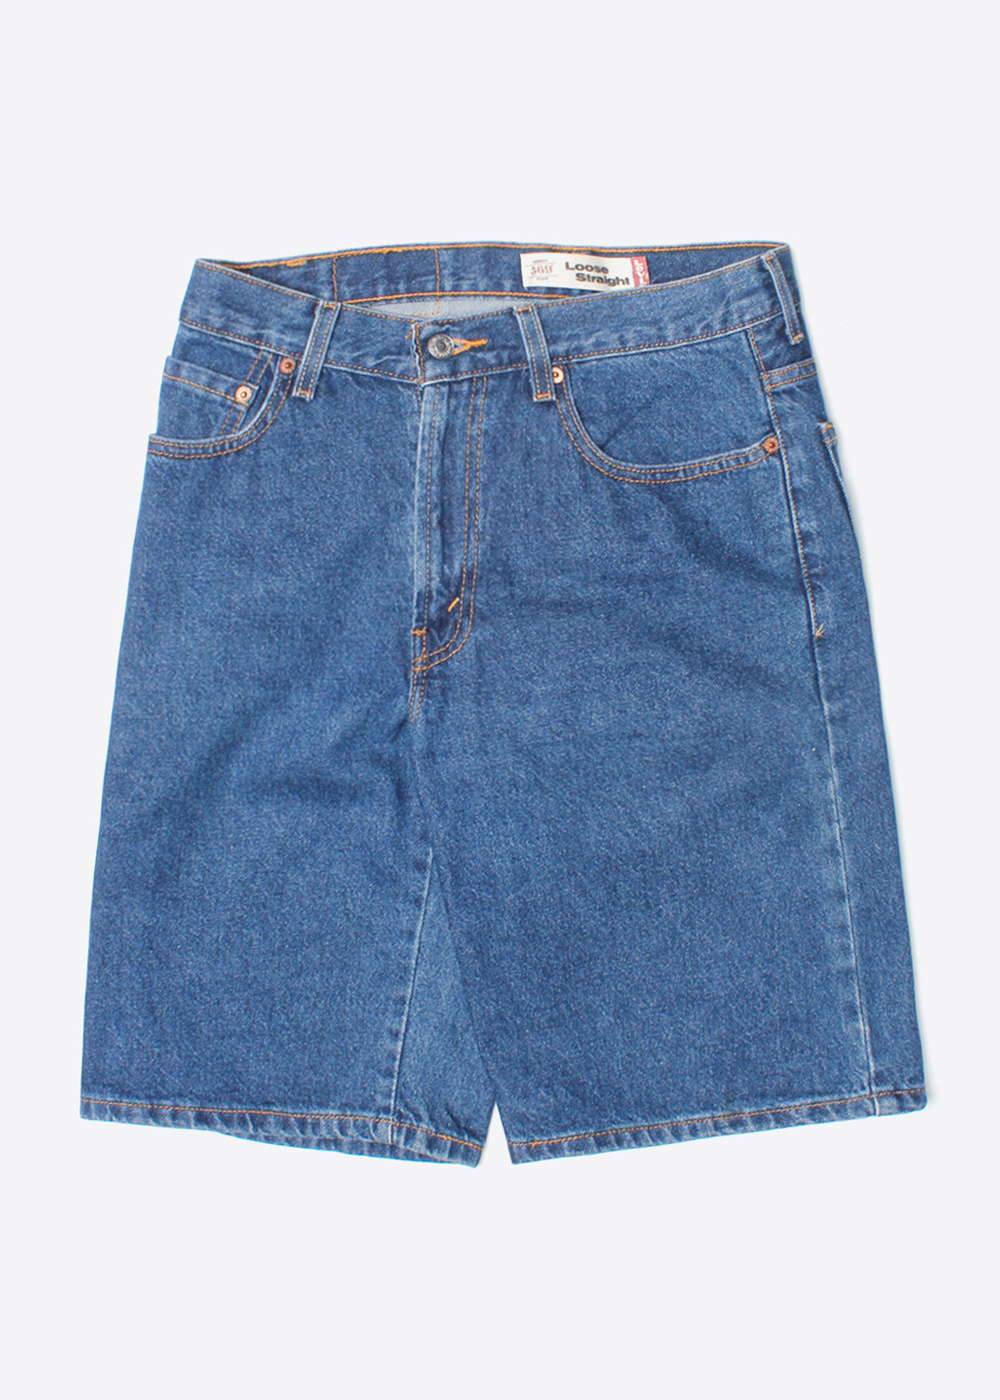 LEVI’S 569’loose fit’u.s.a vintage denim shorts